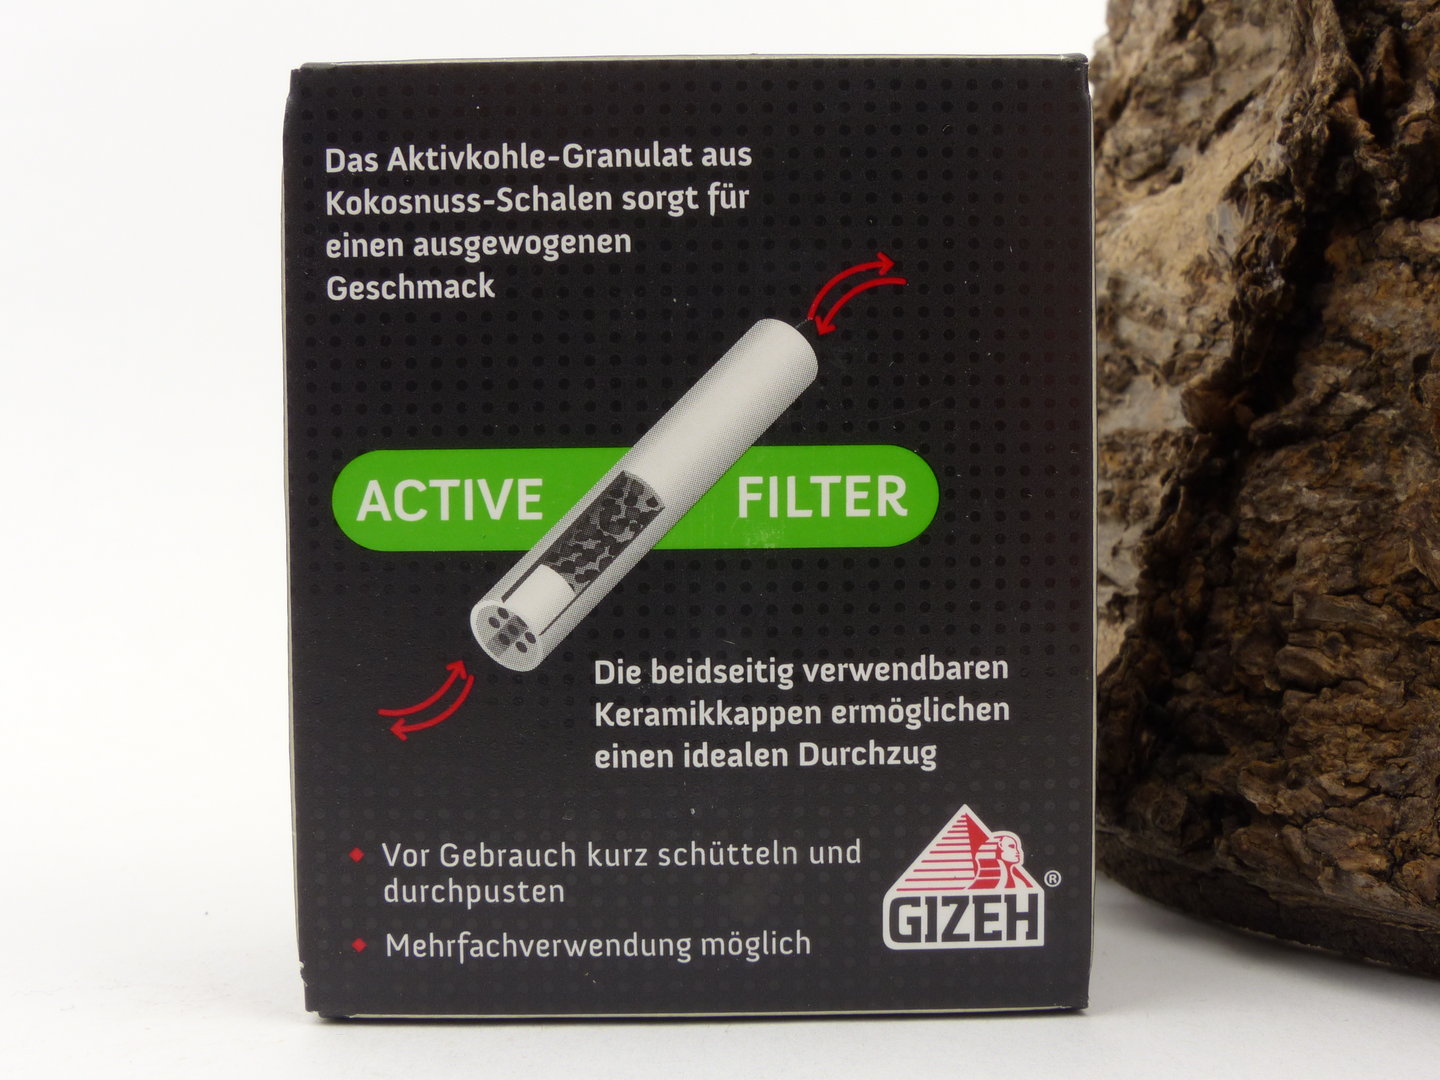 GIZEH - ACTIVE FILTER / 6MM - 34 Aktivkohlefilter - smoKING MADhouse, 6,45 €